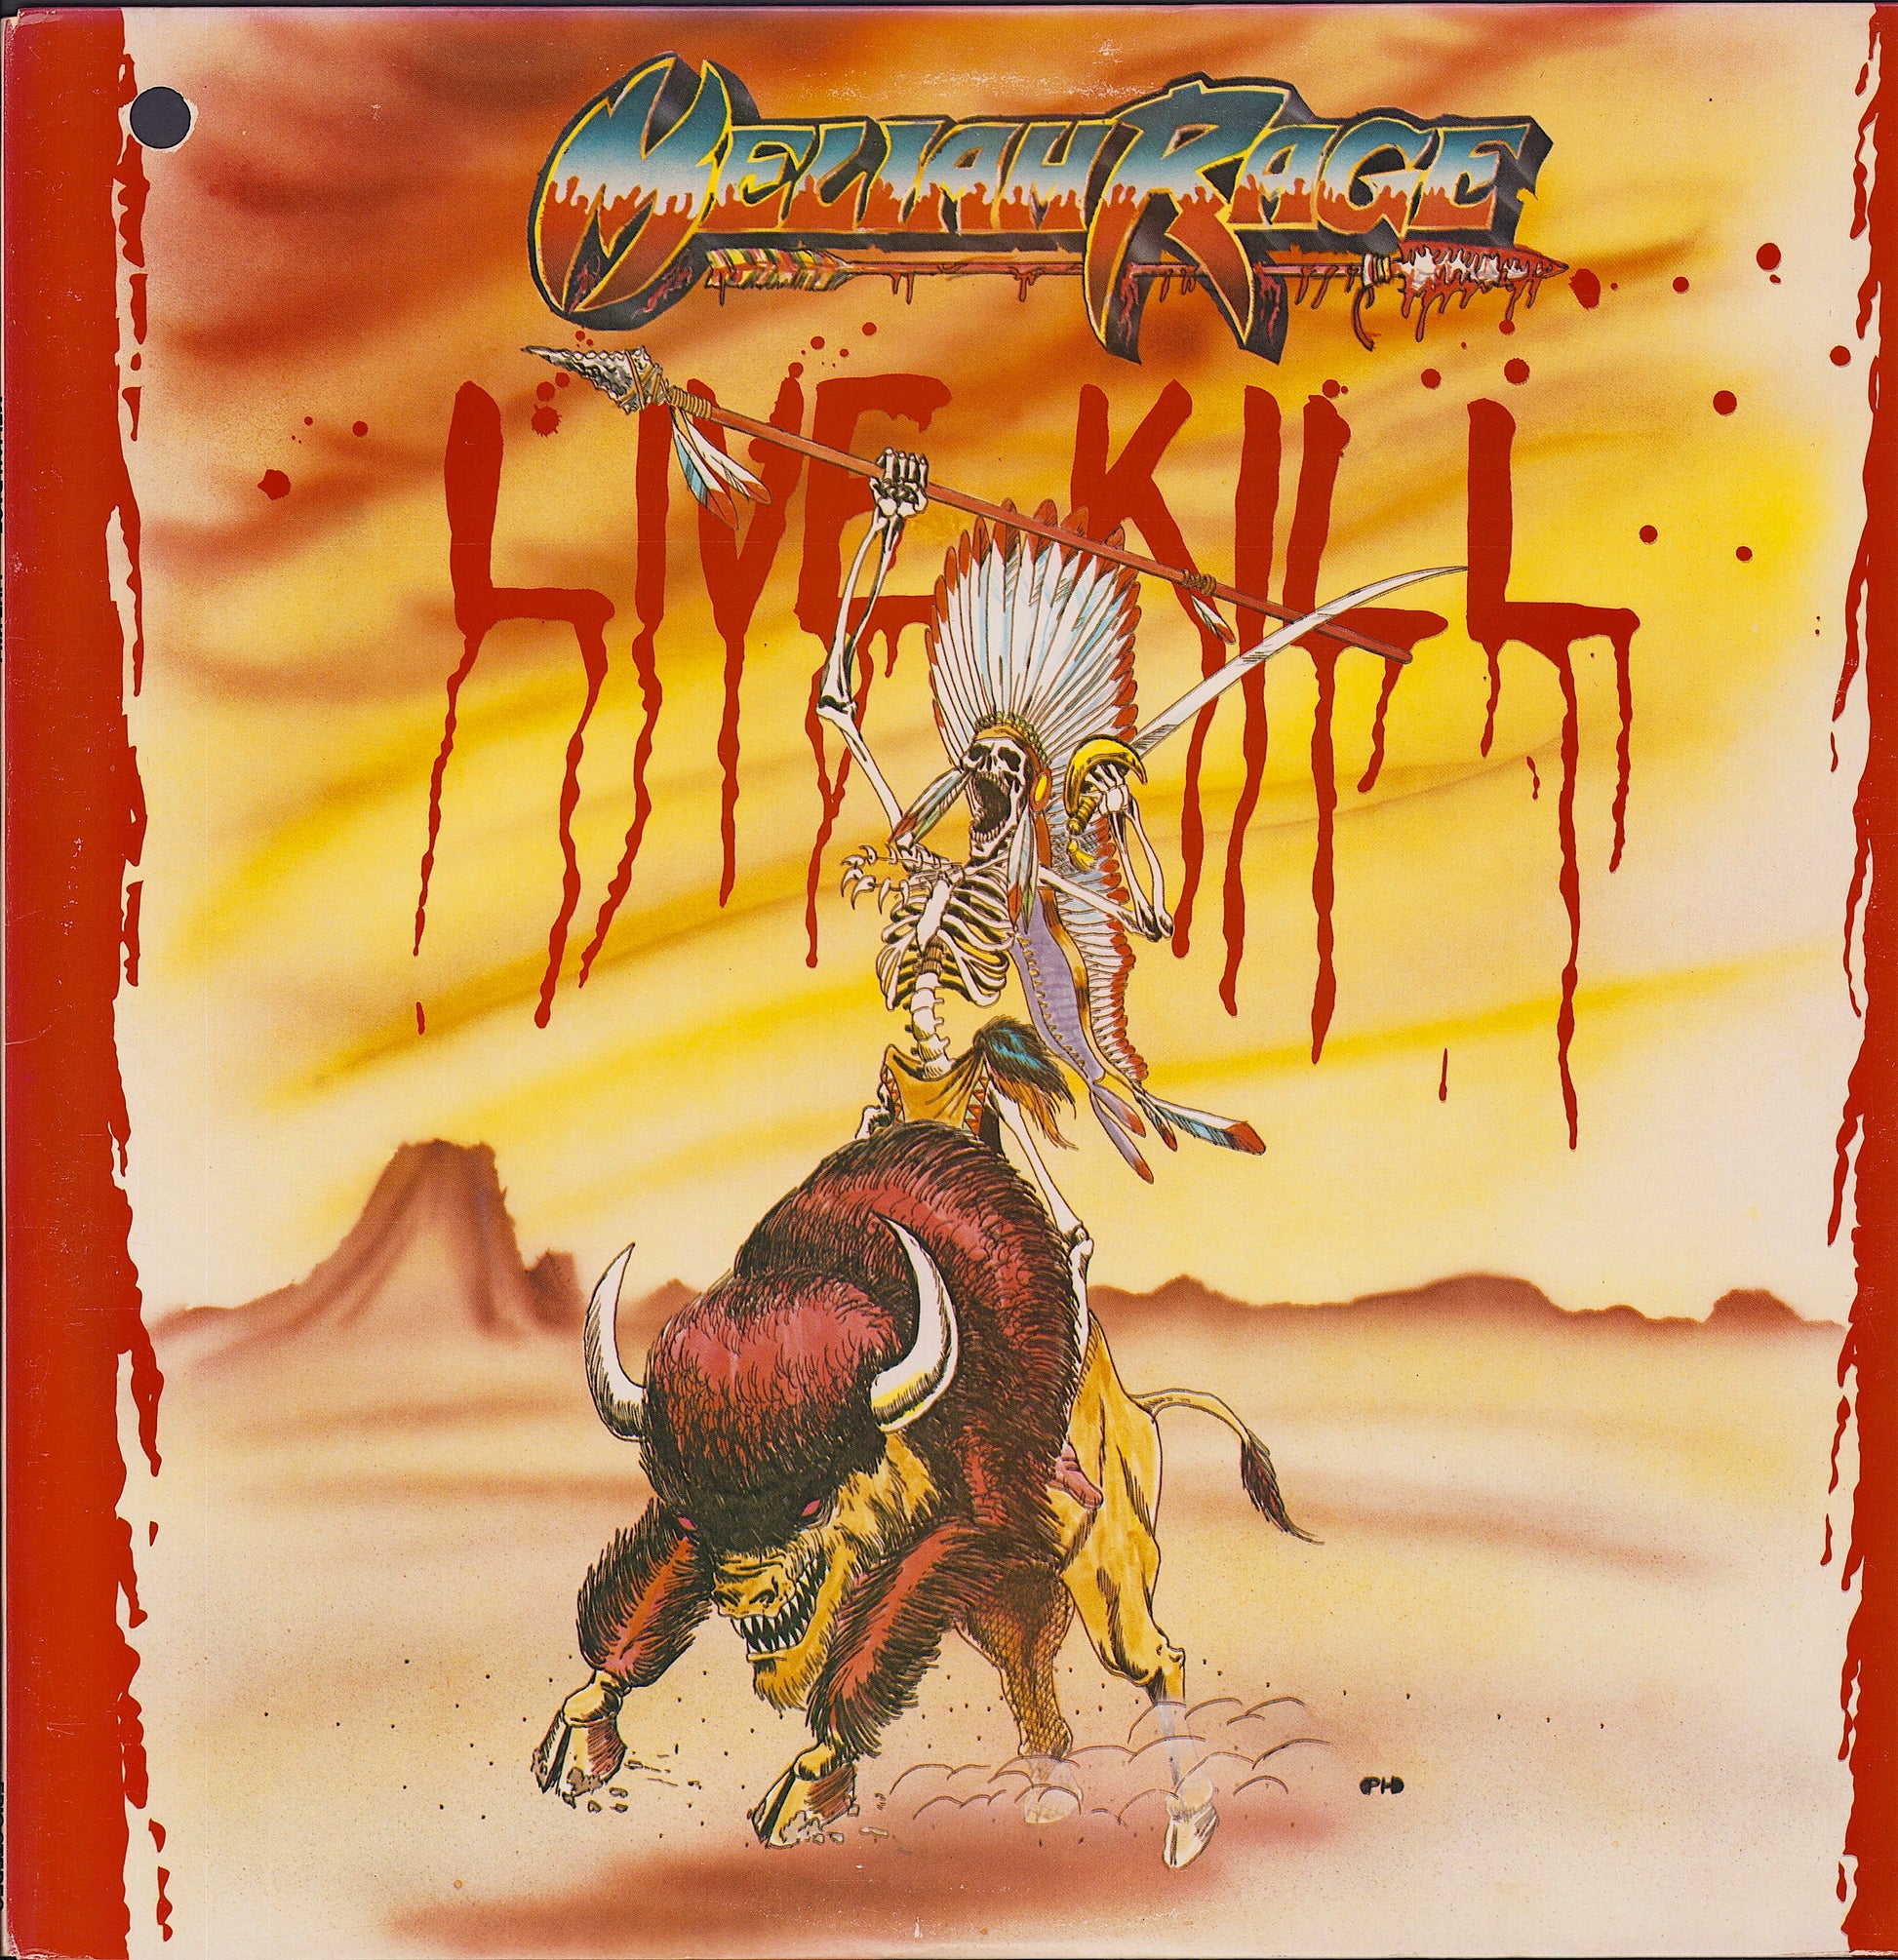 Meliah Rage ‎- Live Kill Vinyl 12"